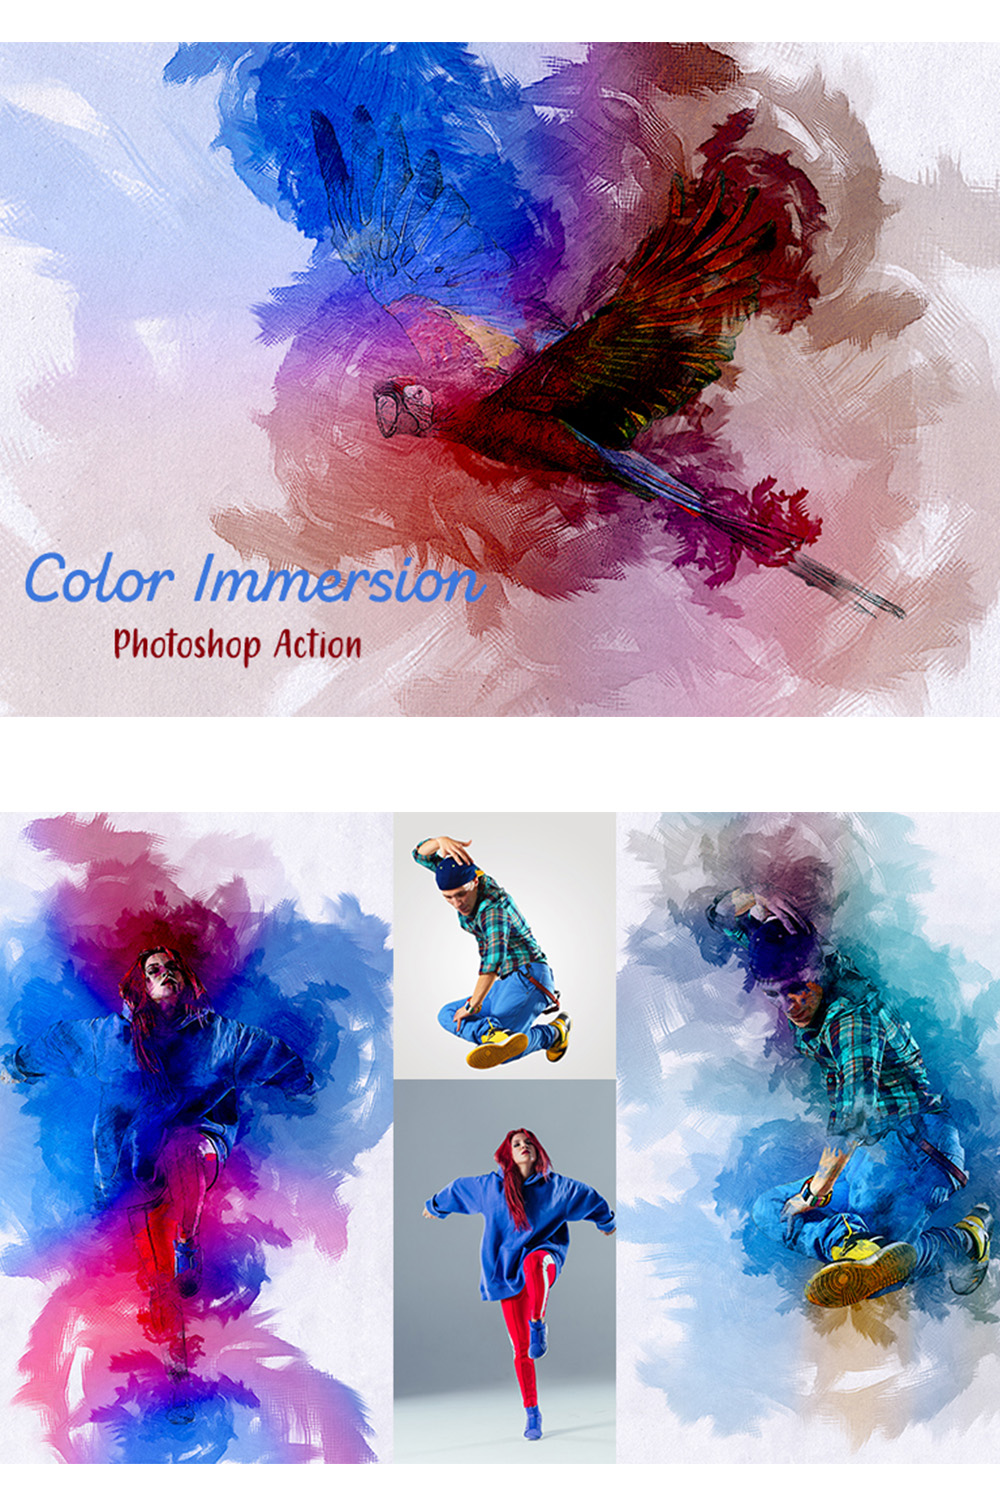 Color Immersion Photoshop Action pinterest preview image.